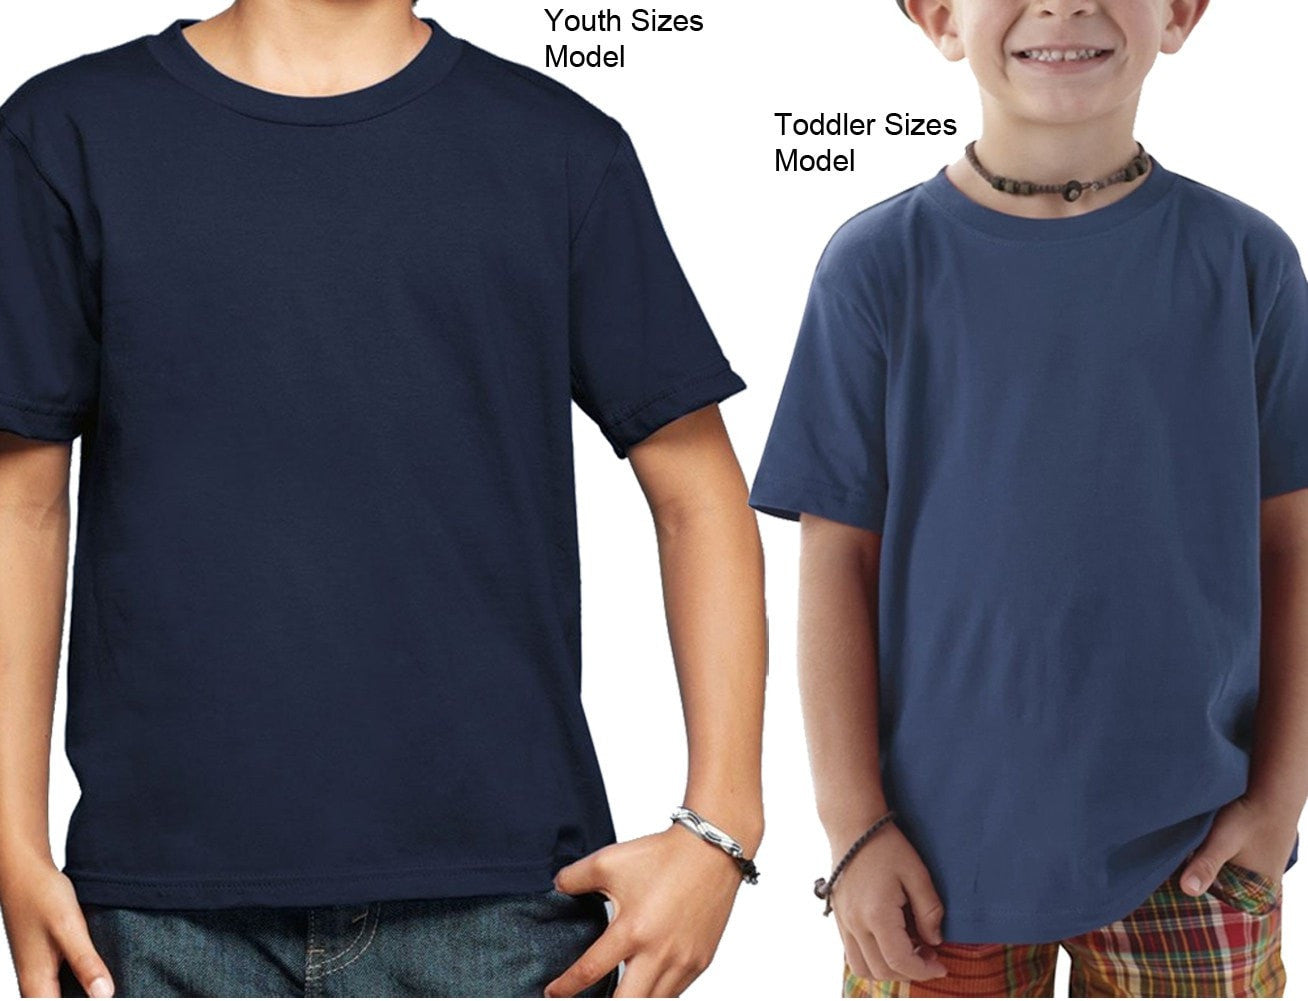 Boy's Chicago 312 Area Code T-Shirt